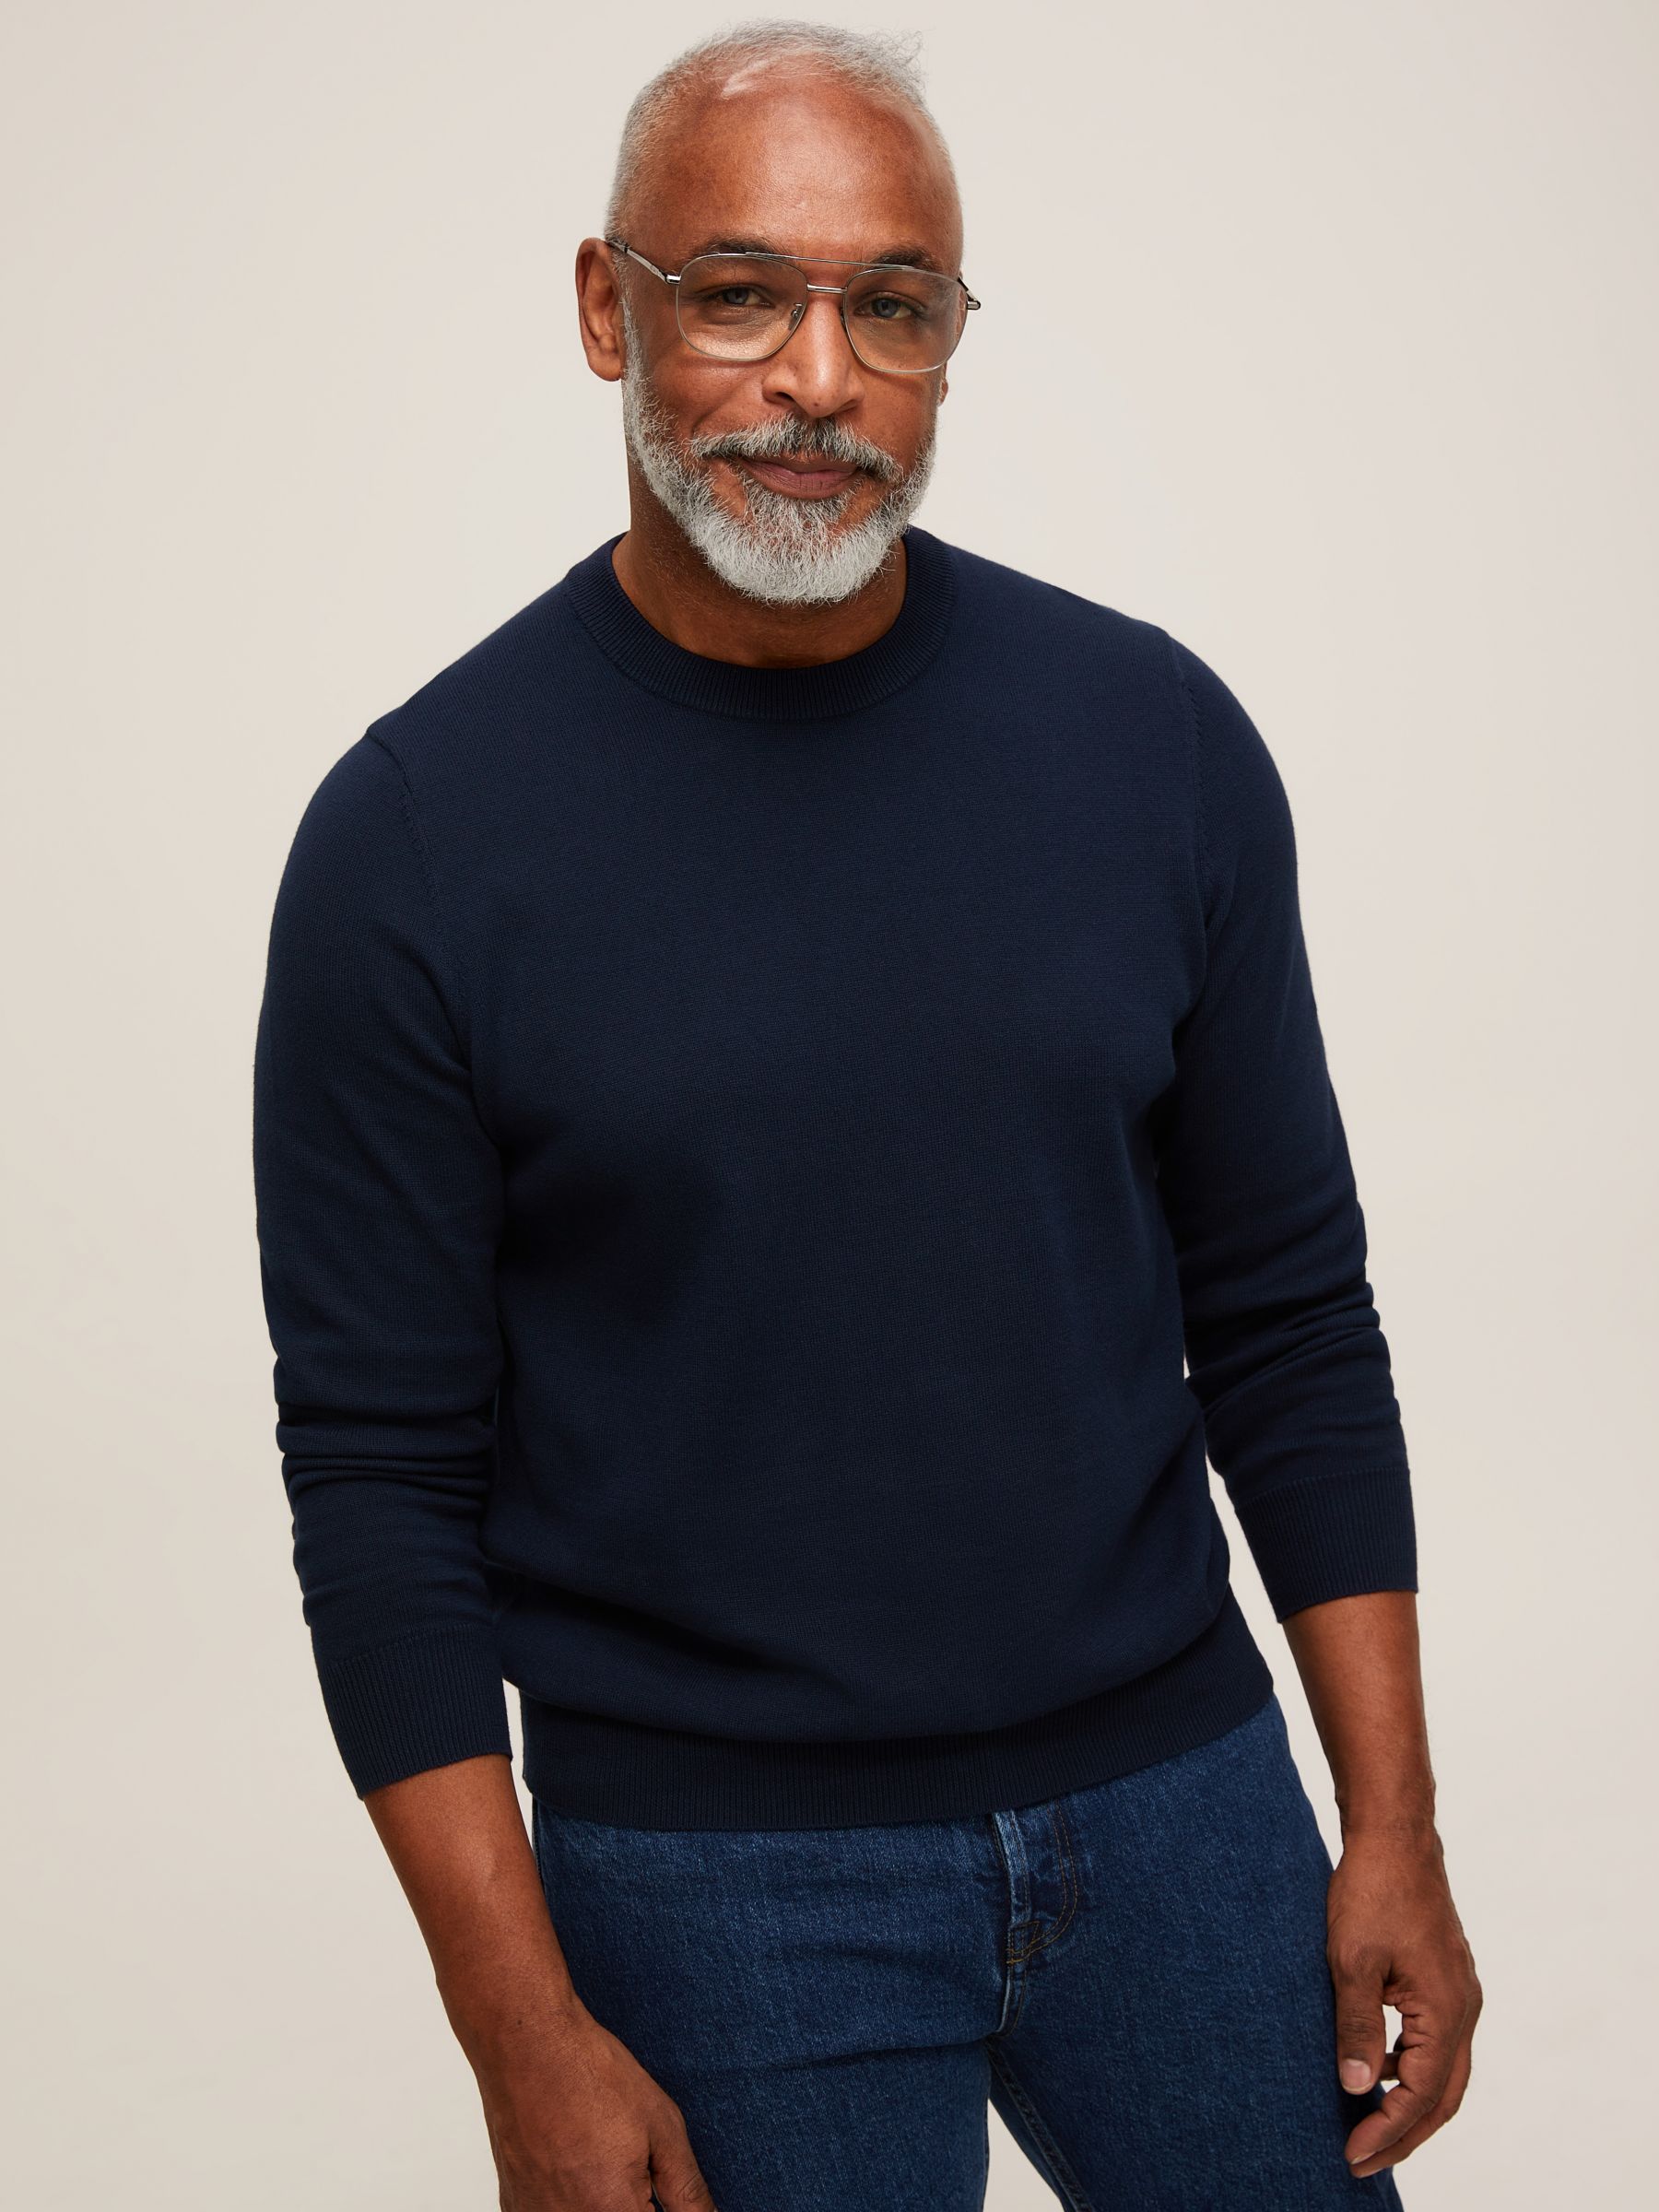 Check styling ideas for「Supima® Cotton Crew Neck T-Shirt、Denim Utility  Long-Sleeve Overshirt」